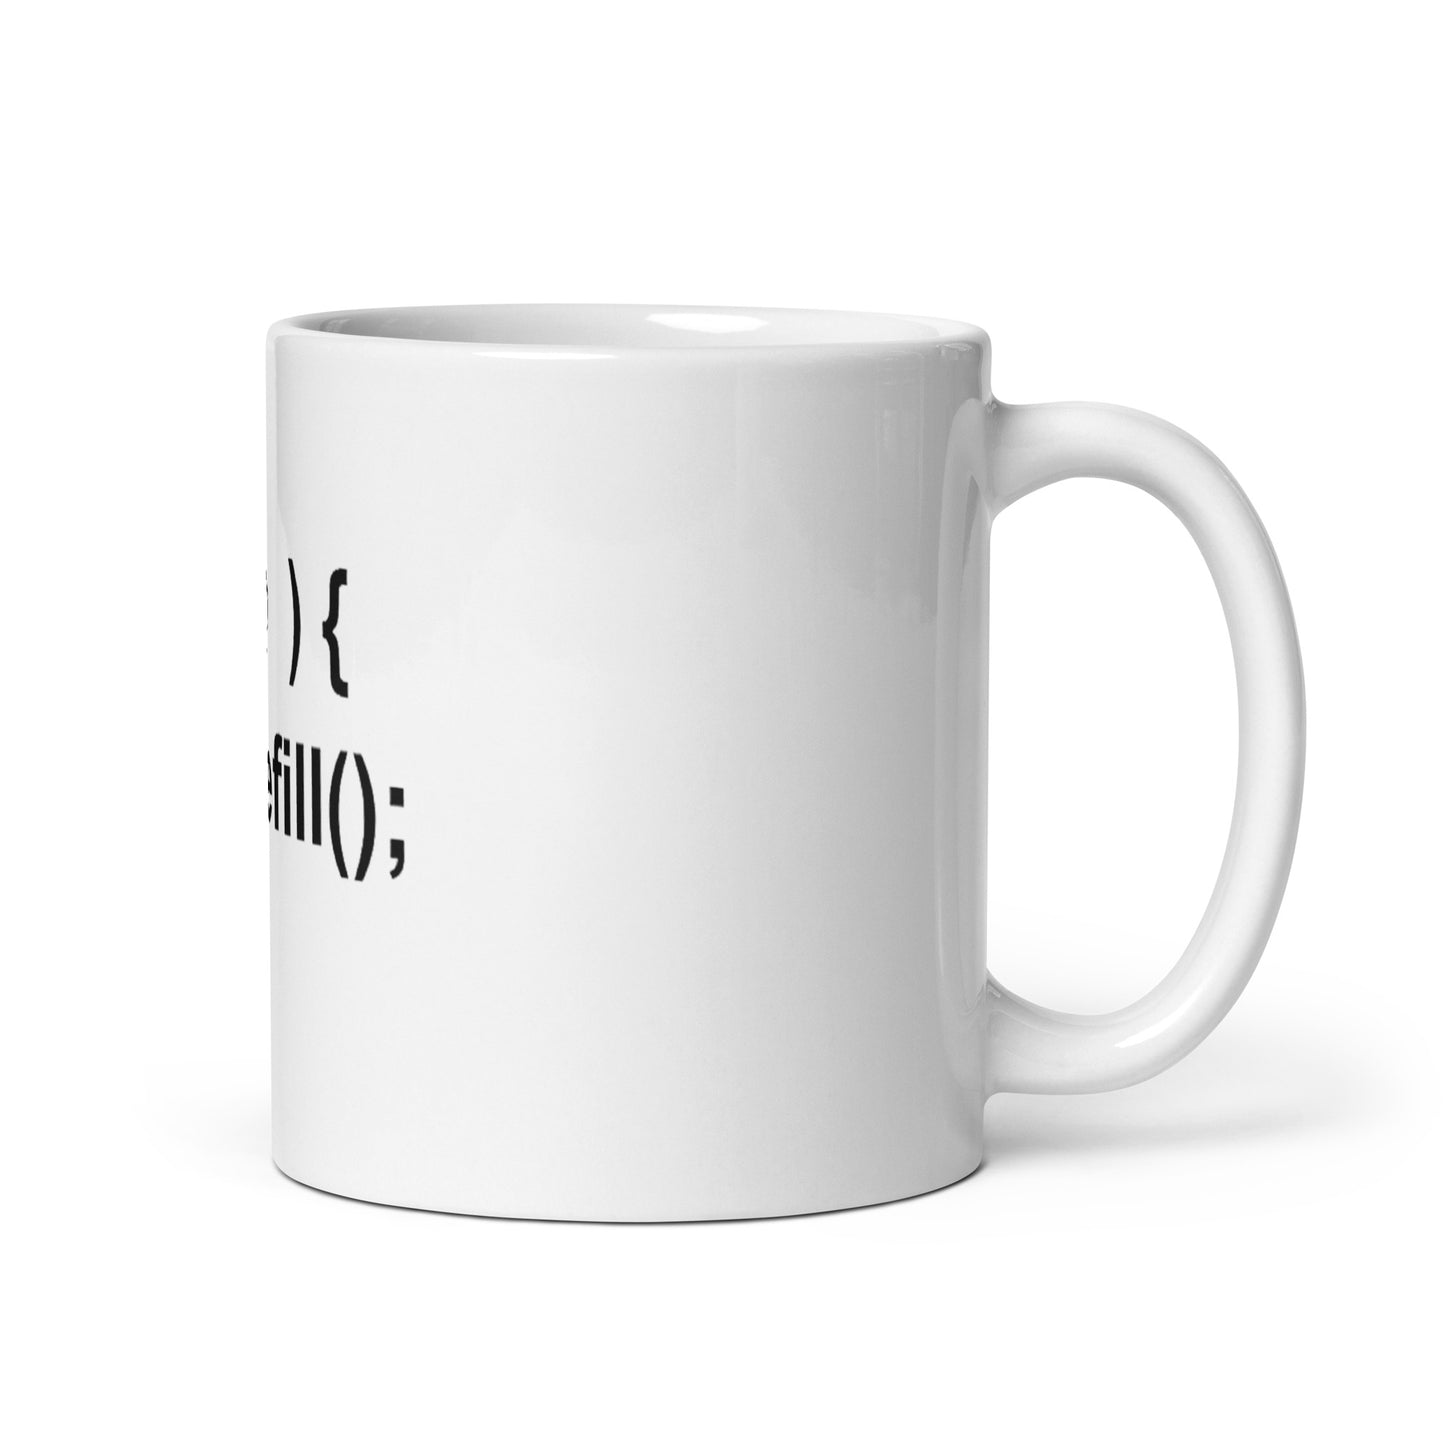 Cup.Refill glossy mug